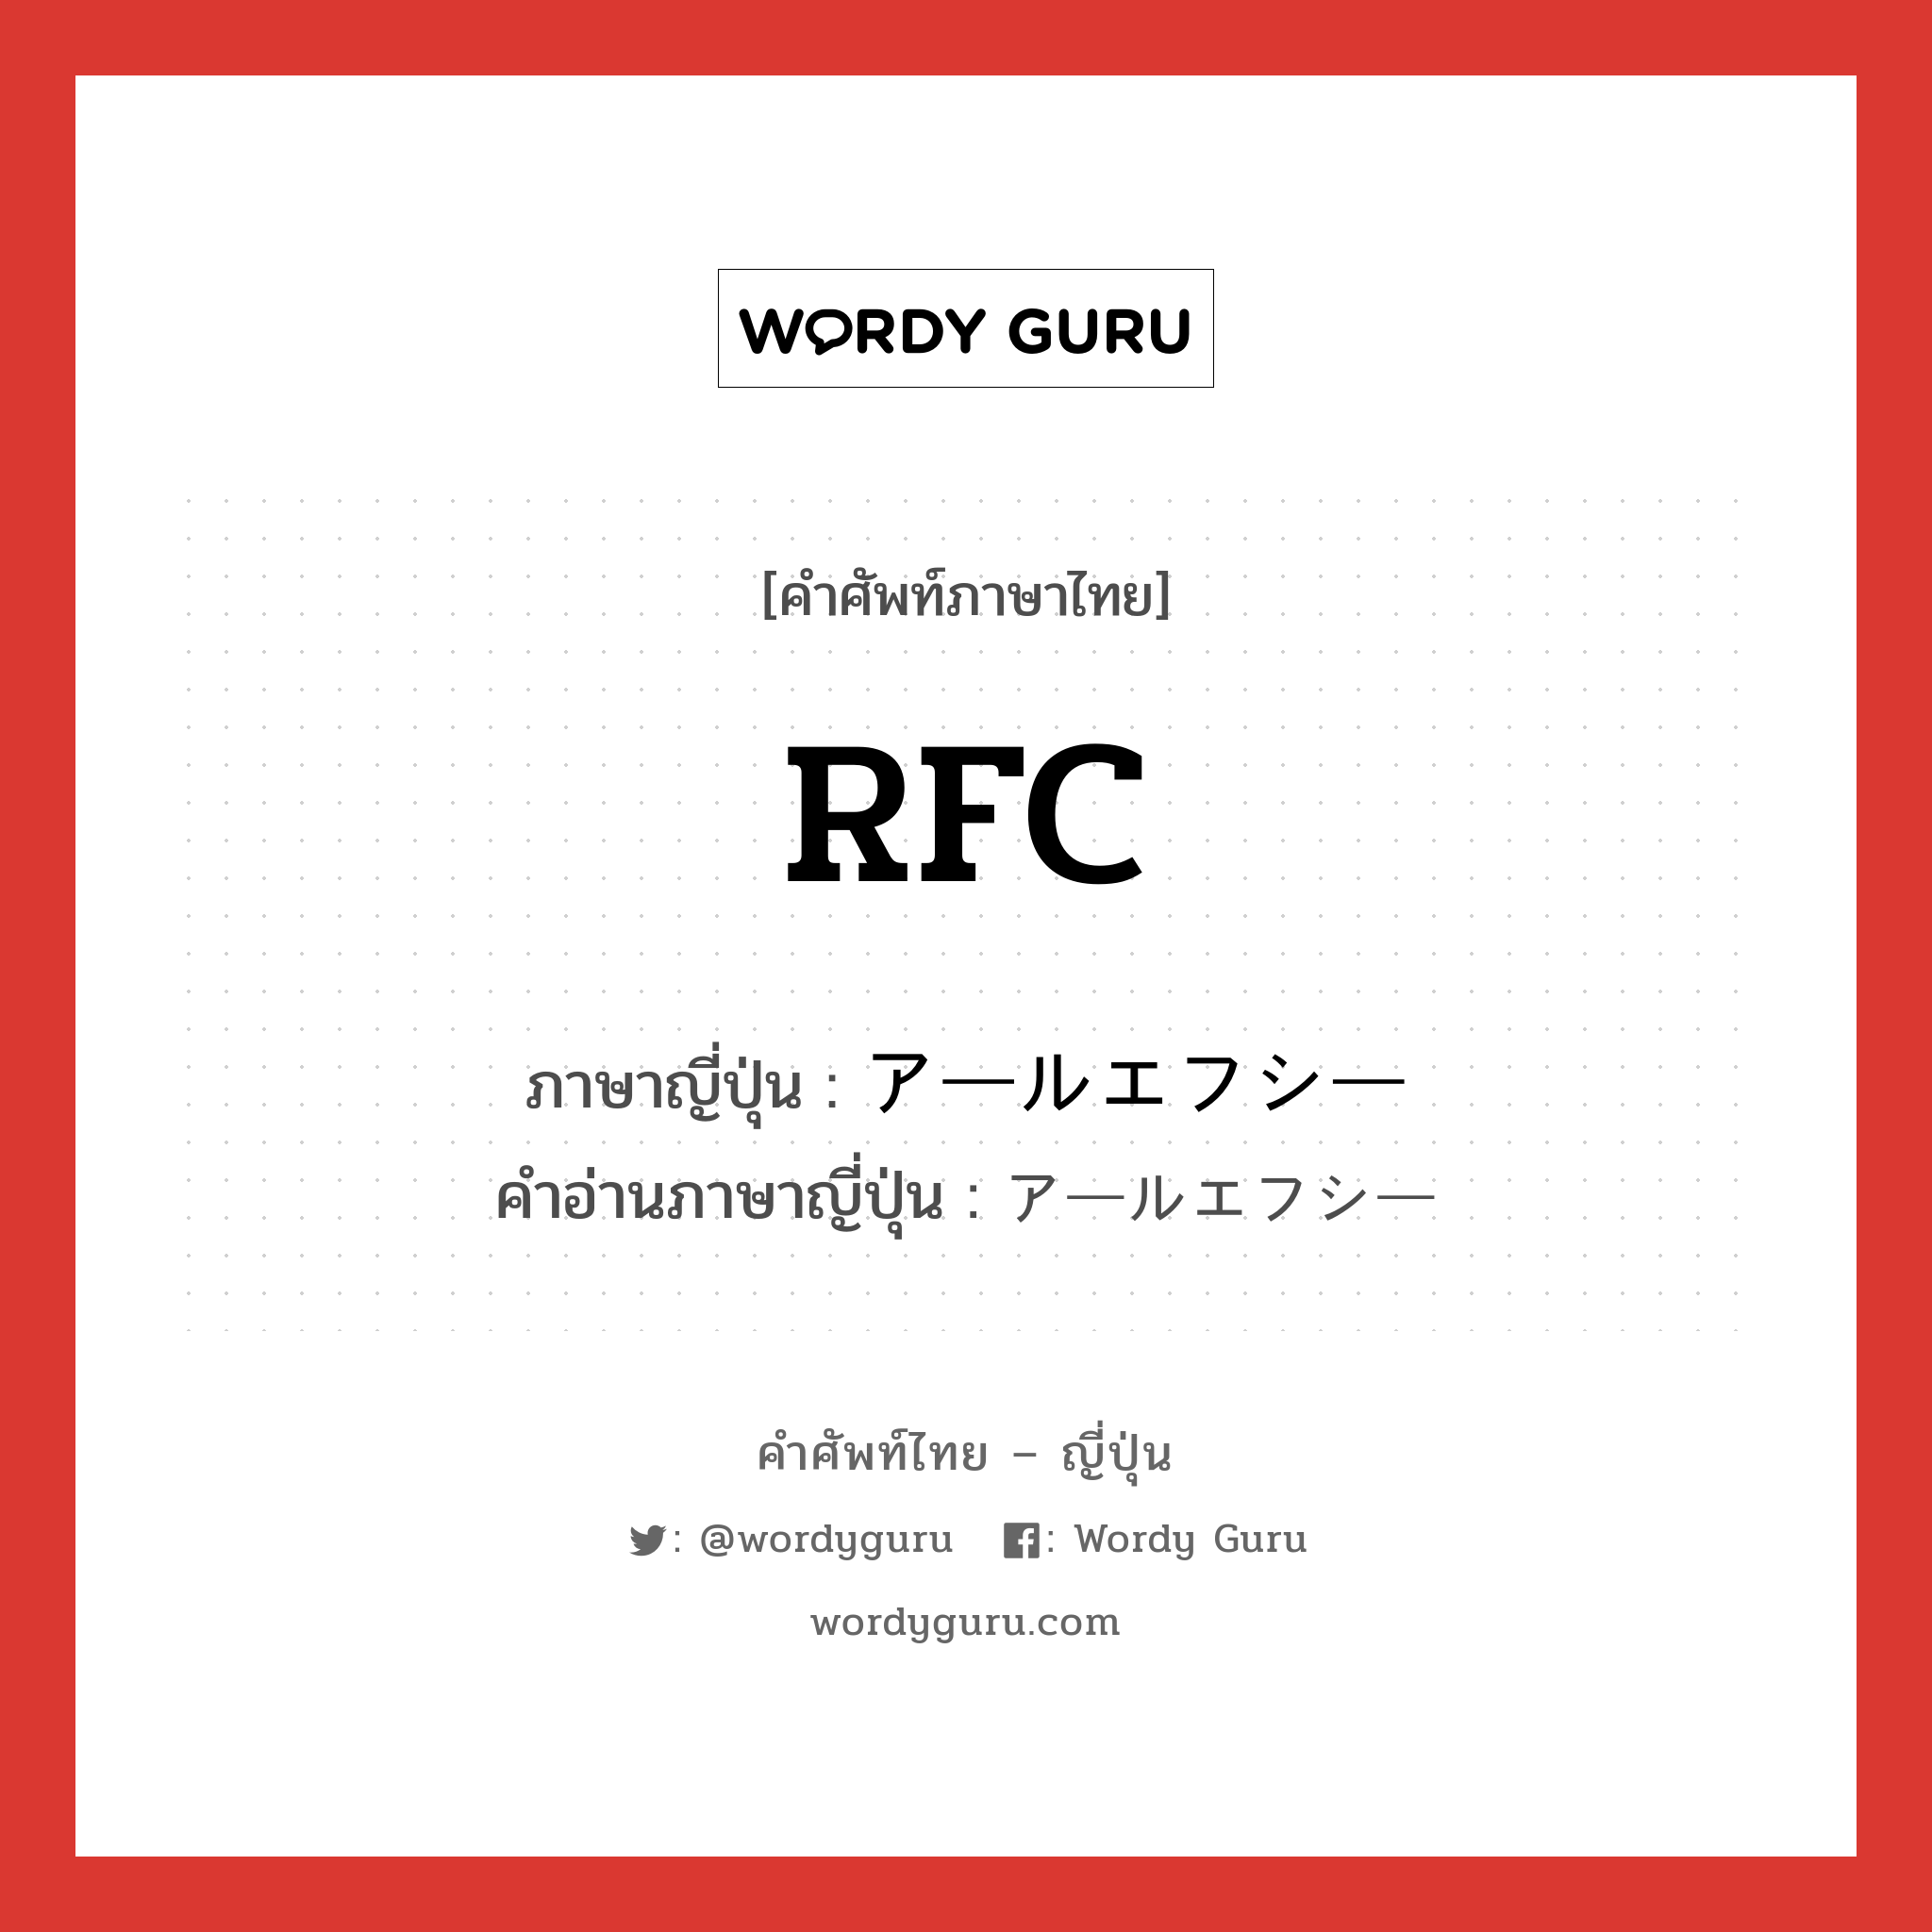 RFC ภาษาญี่ปุ่นคืออะไร, คำศัพท์ภาษาไทย - ญี่ปุ่น RFC ภาษาญี่ปุ่น アールエフシー คำอ่านภาษาญี่ปุ่น アールエフシー หมวด n หมวด n